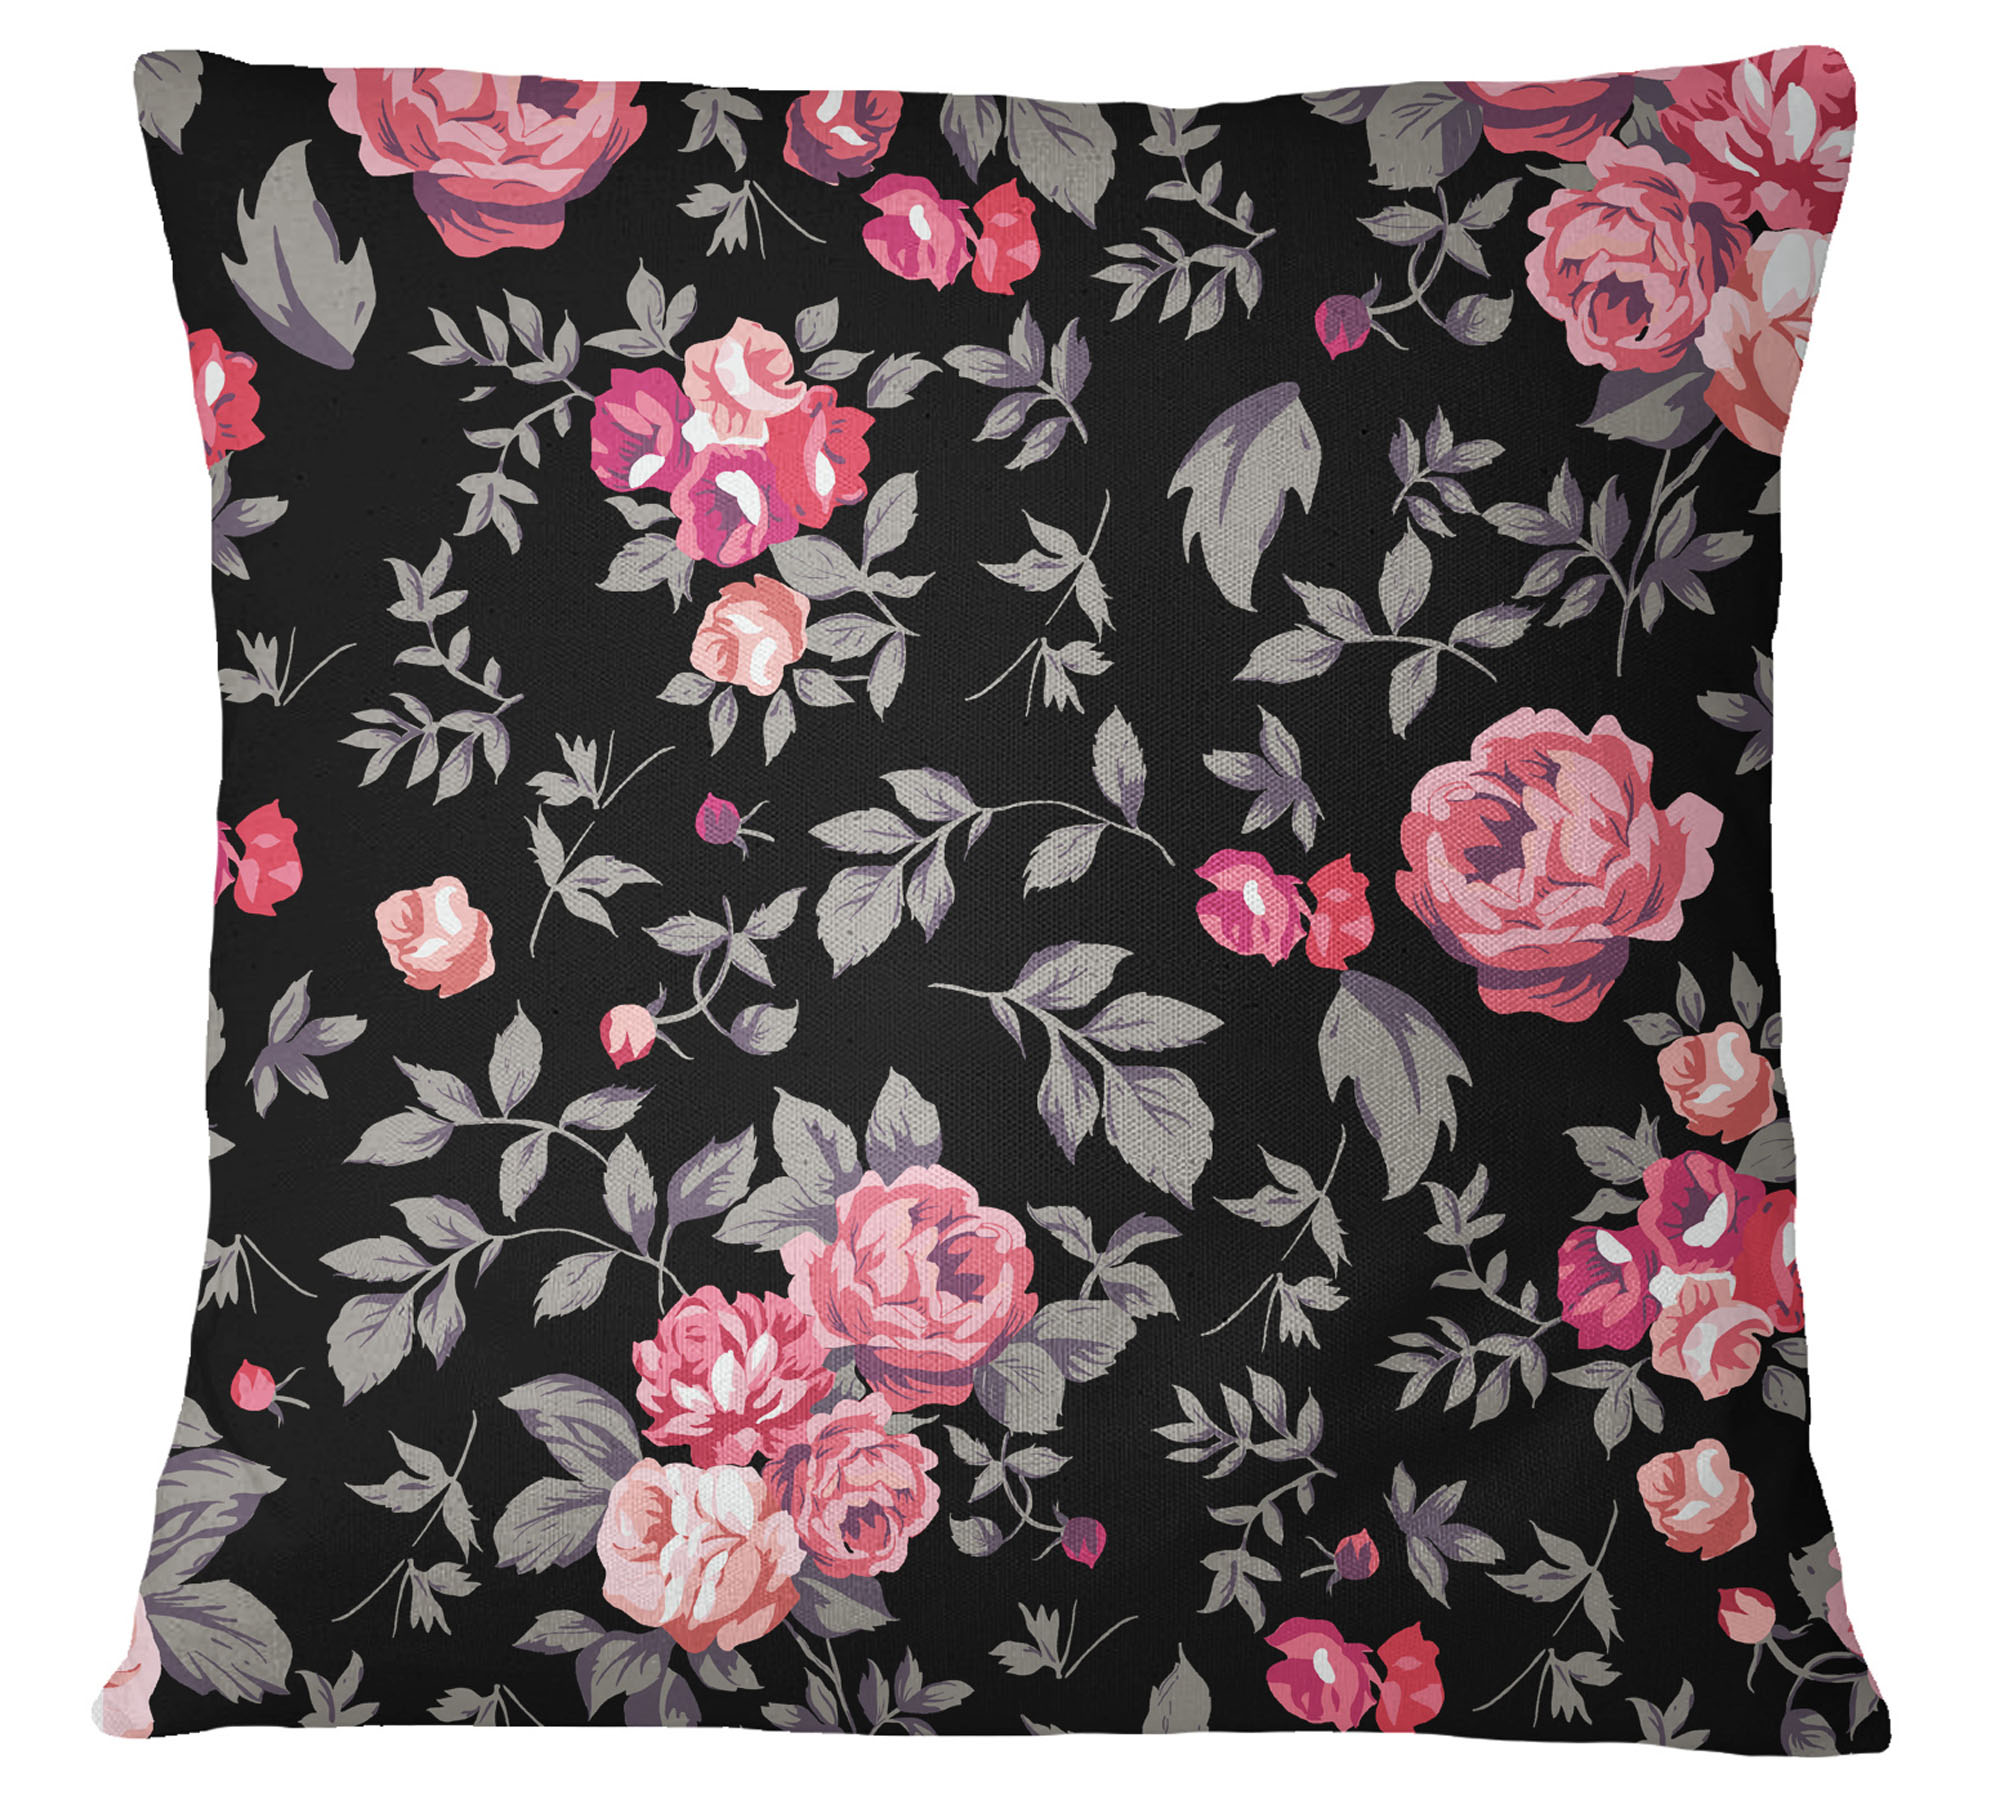 Details about   S4Sassy 1 Pair Cotton Poplin Floral Print Pillow Sham Case Sofa Cushion Cover 